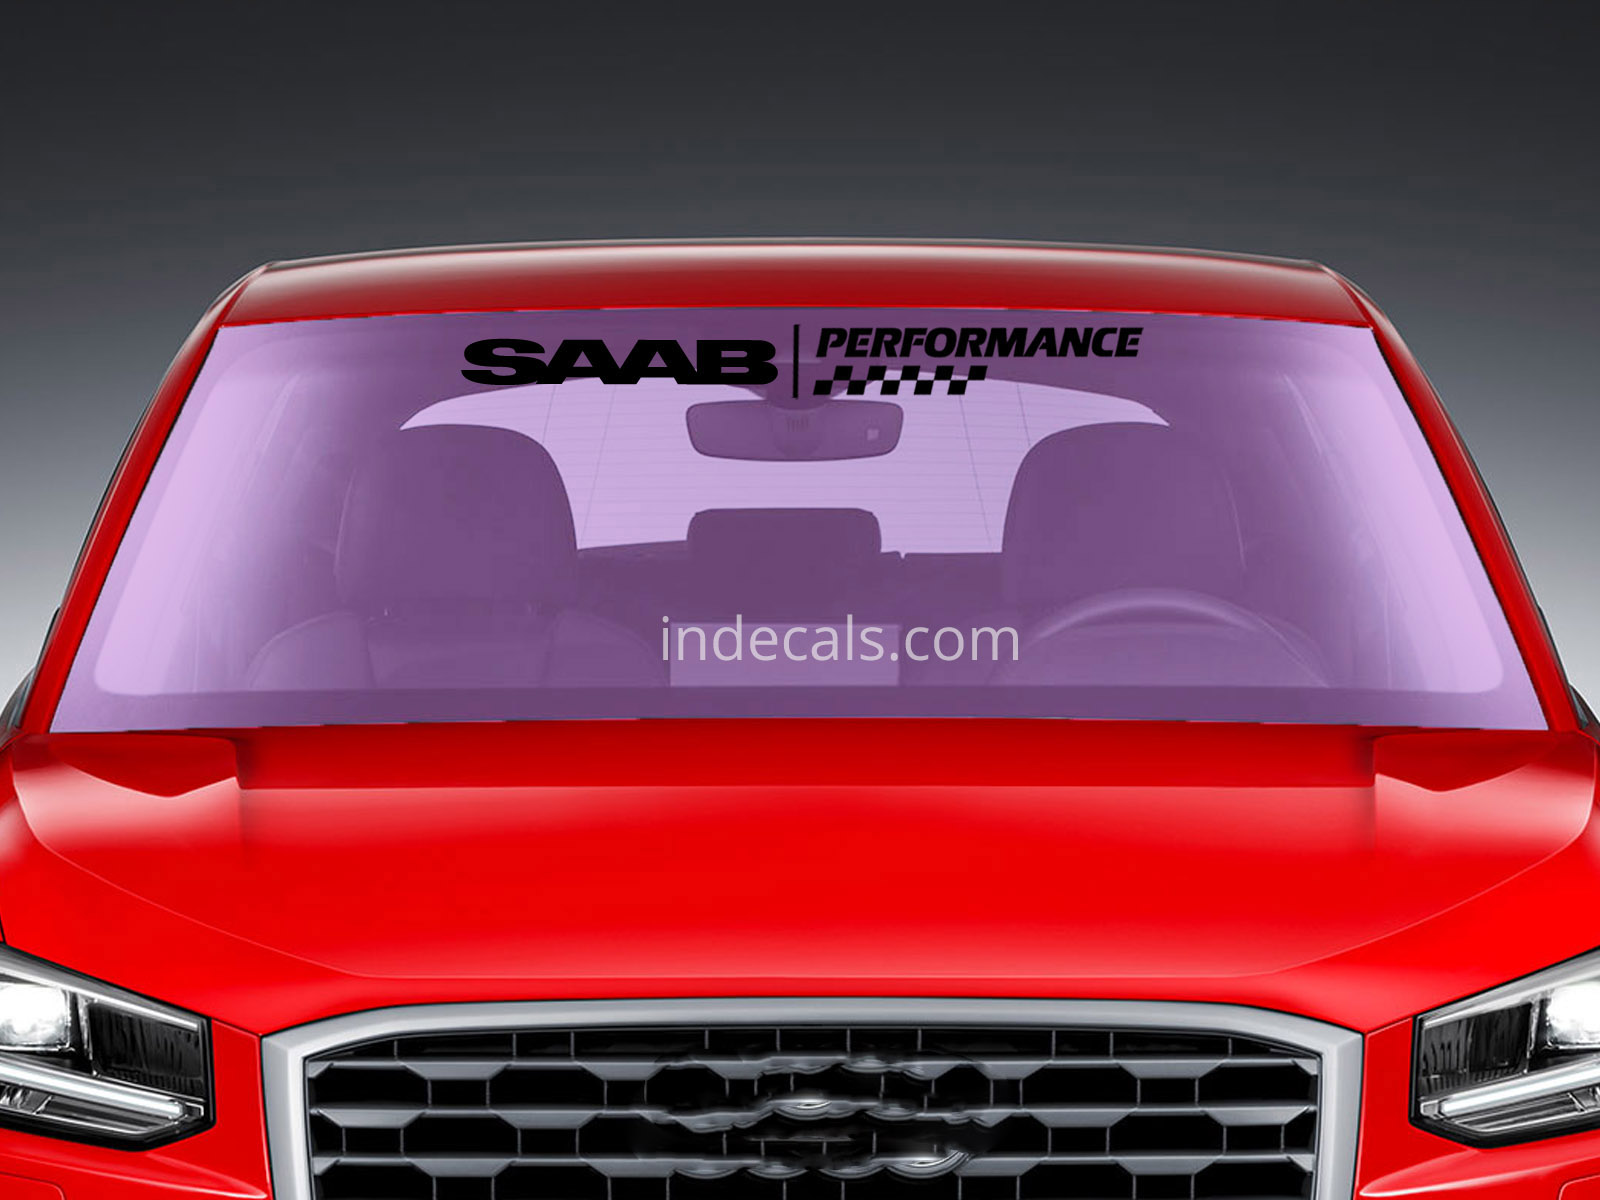 1 x Saab Performance Sticker for Windshield or Back Window - Black